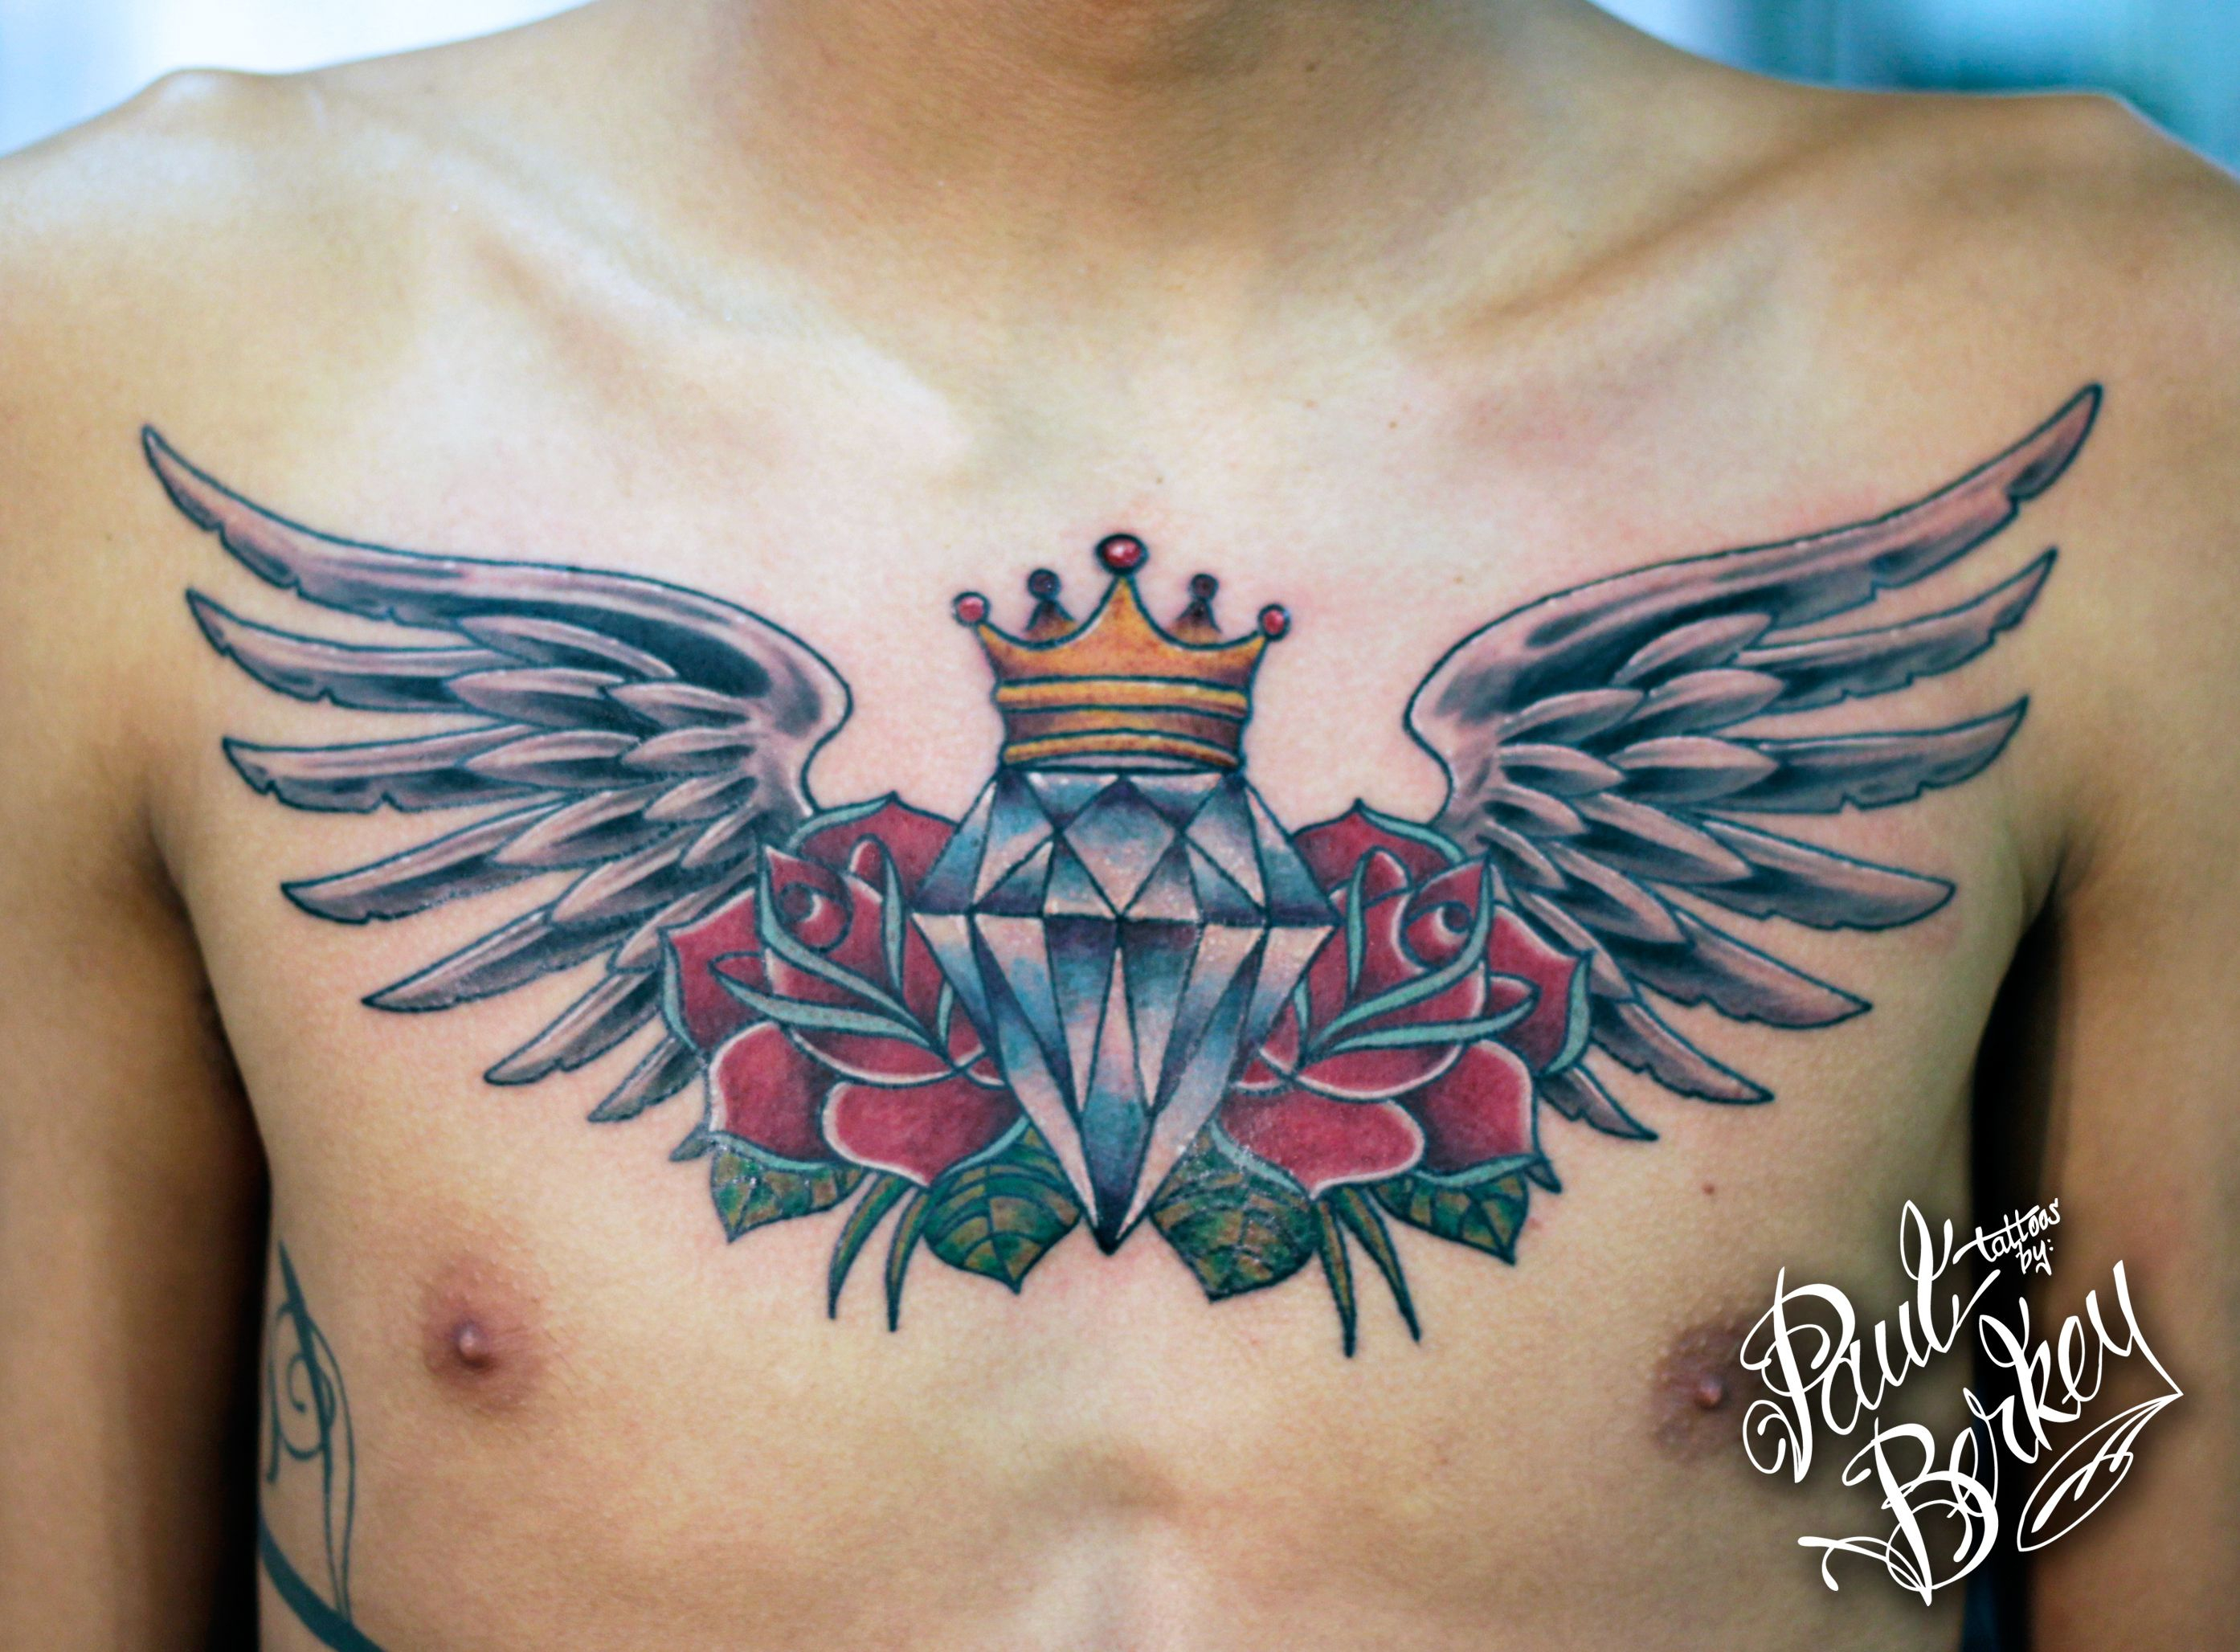 Chest Diamond Wings Roses Tattoos Paulberkey Tattoos throughout sizing 2788 X 2056